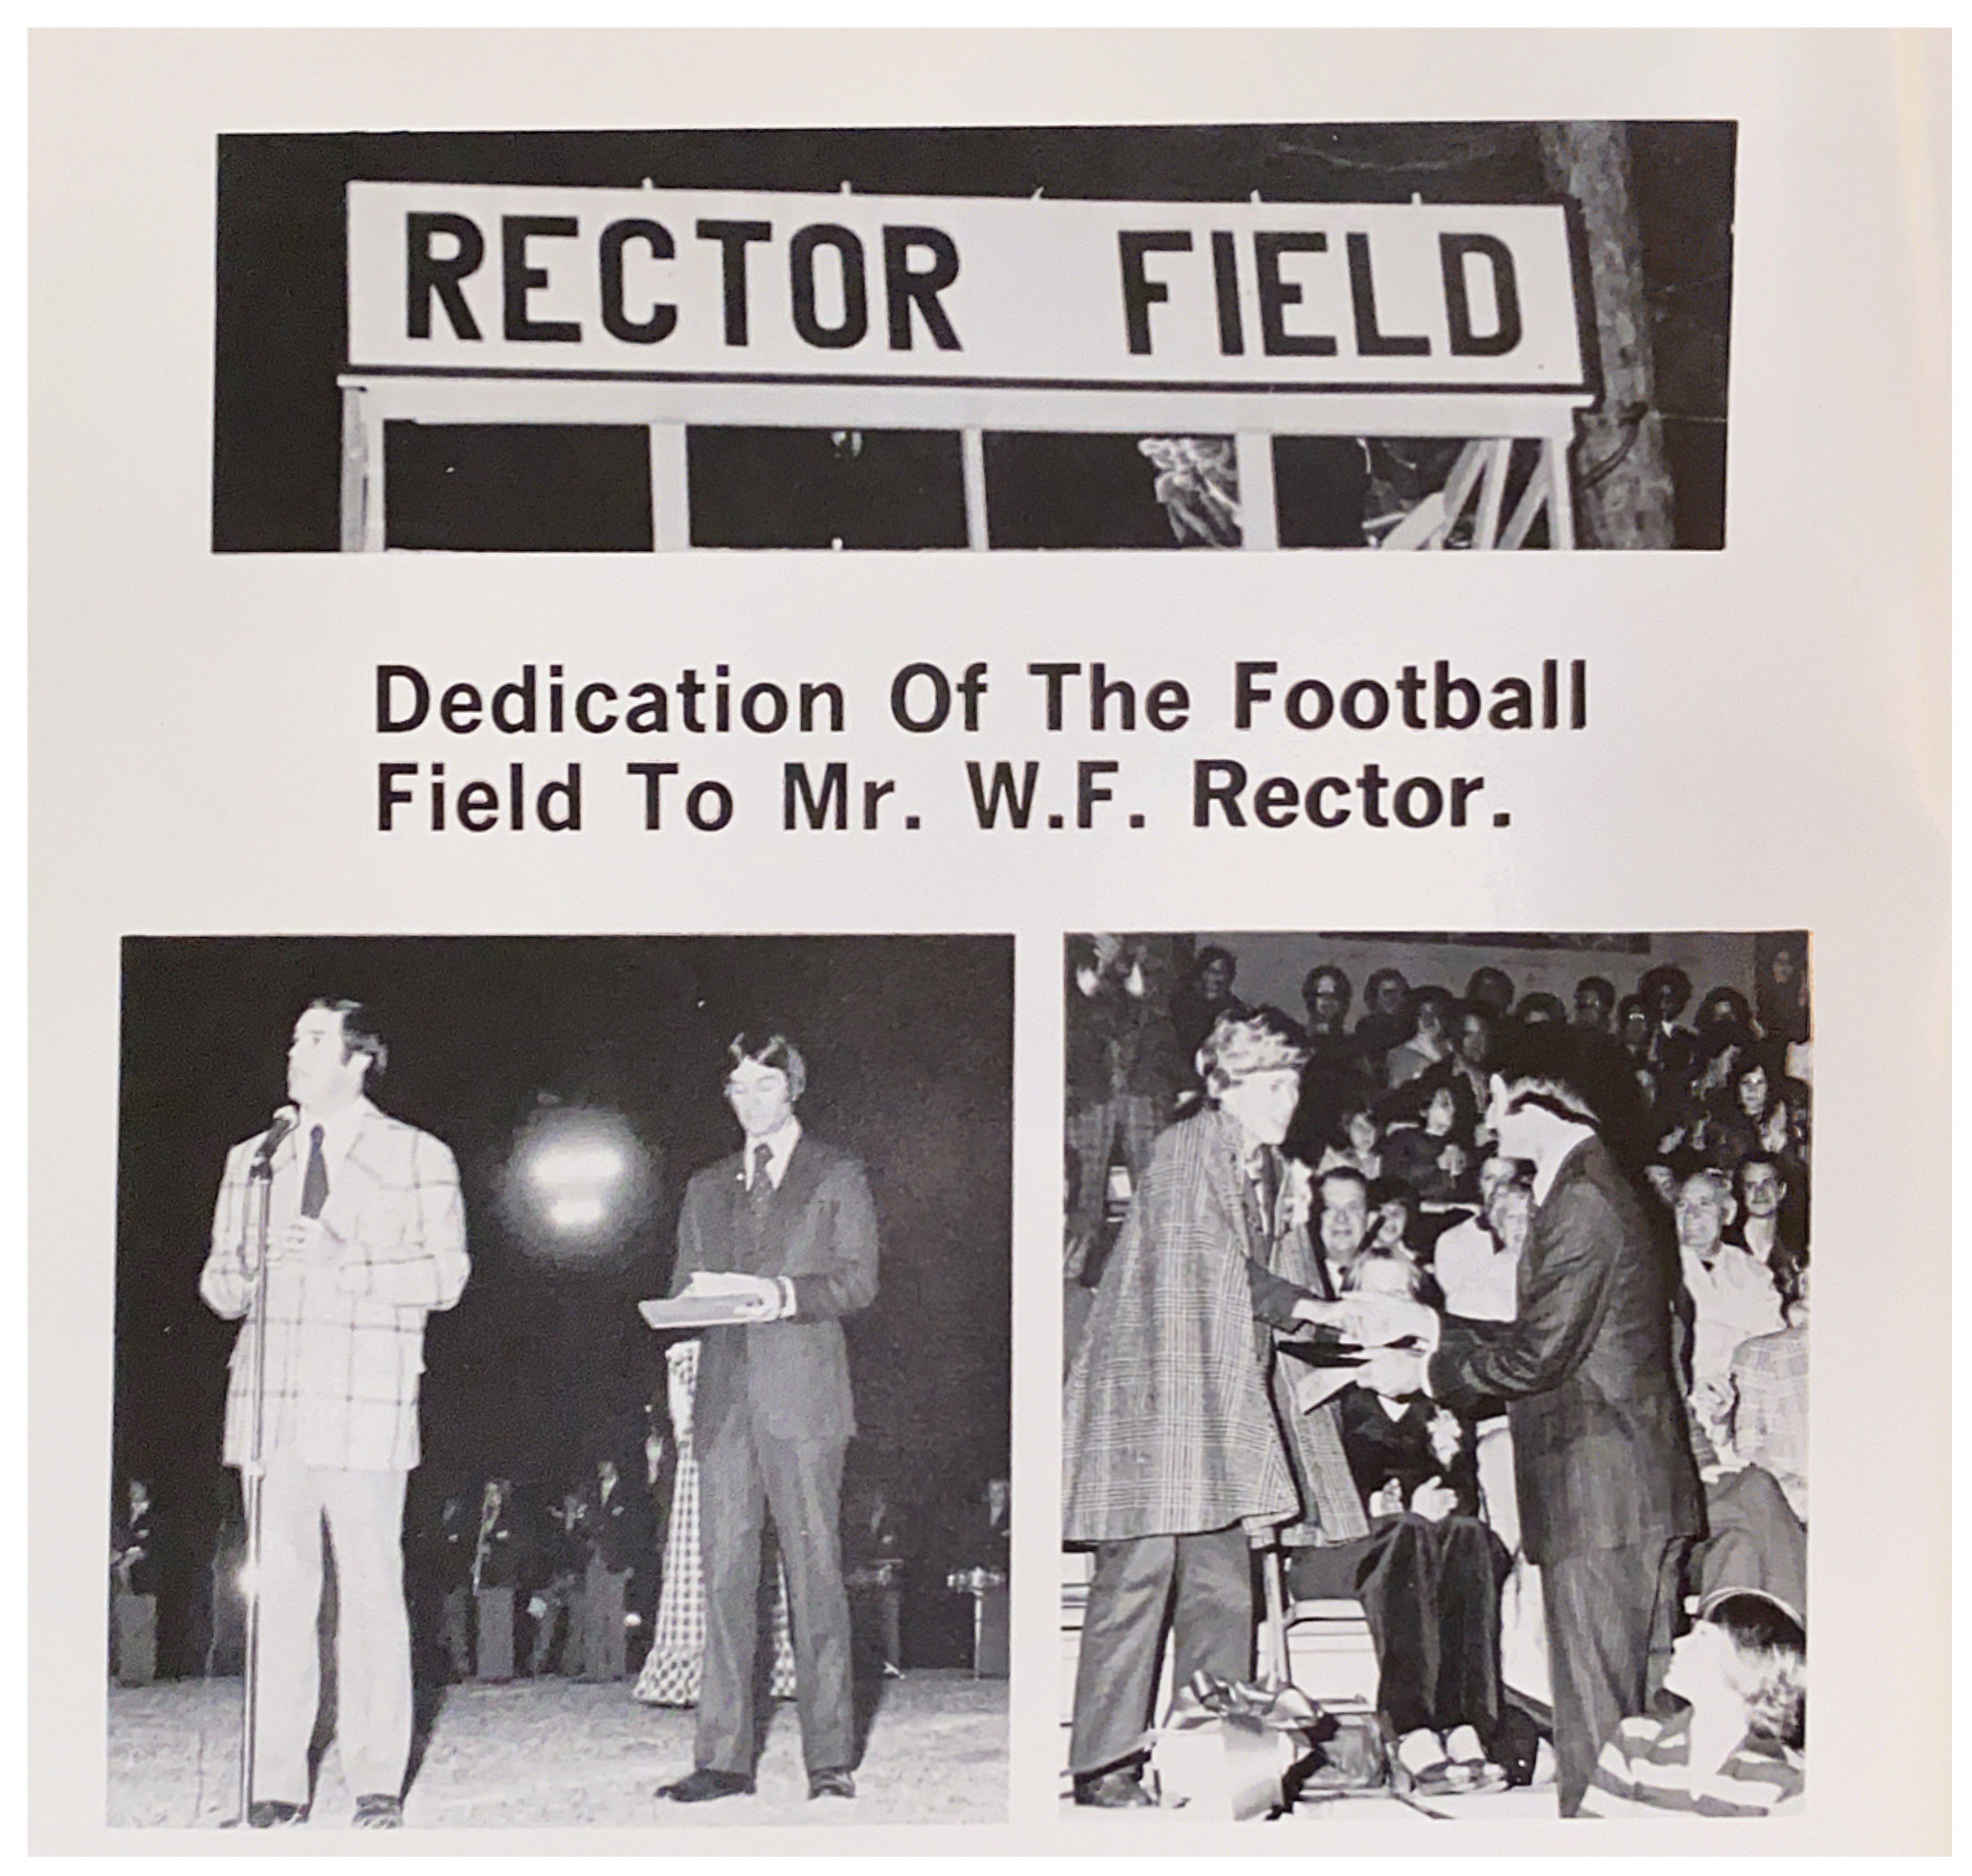 1976 rector field decidation